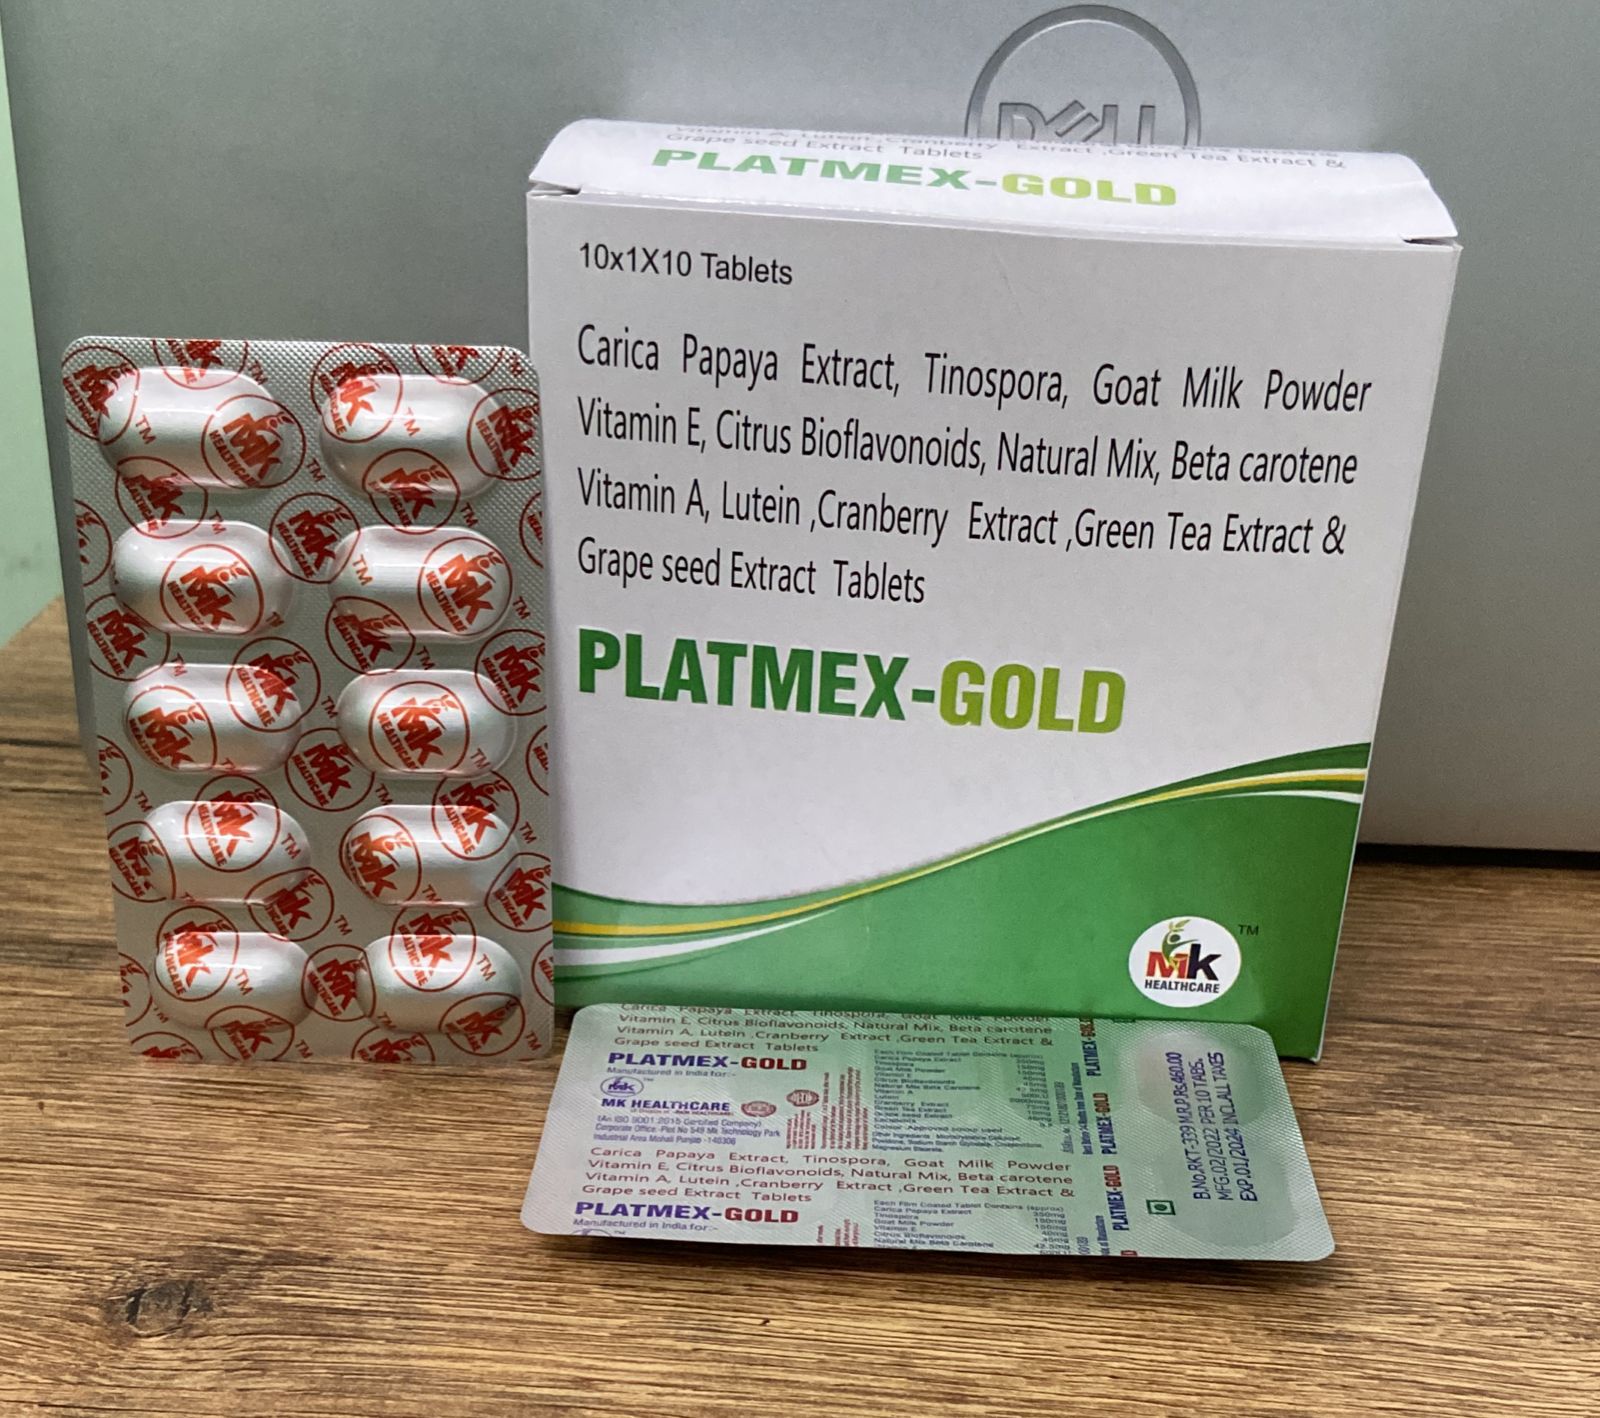 PLATMEX-GOLD